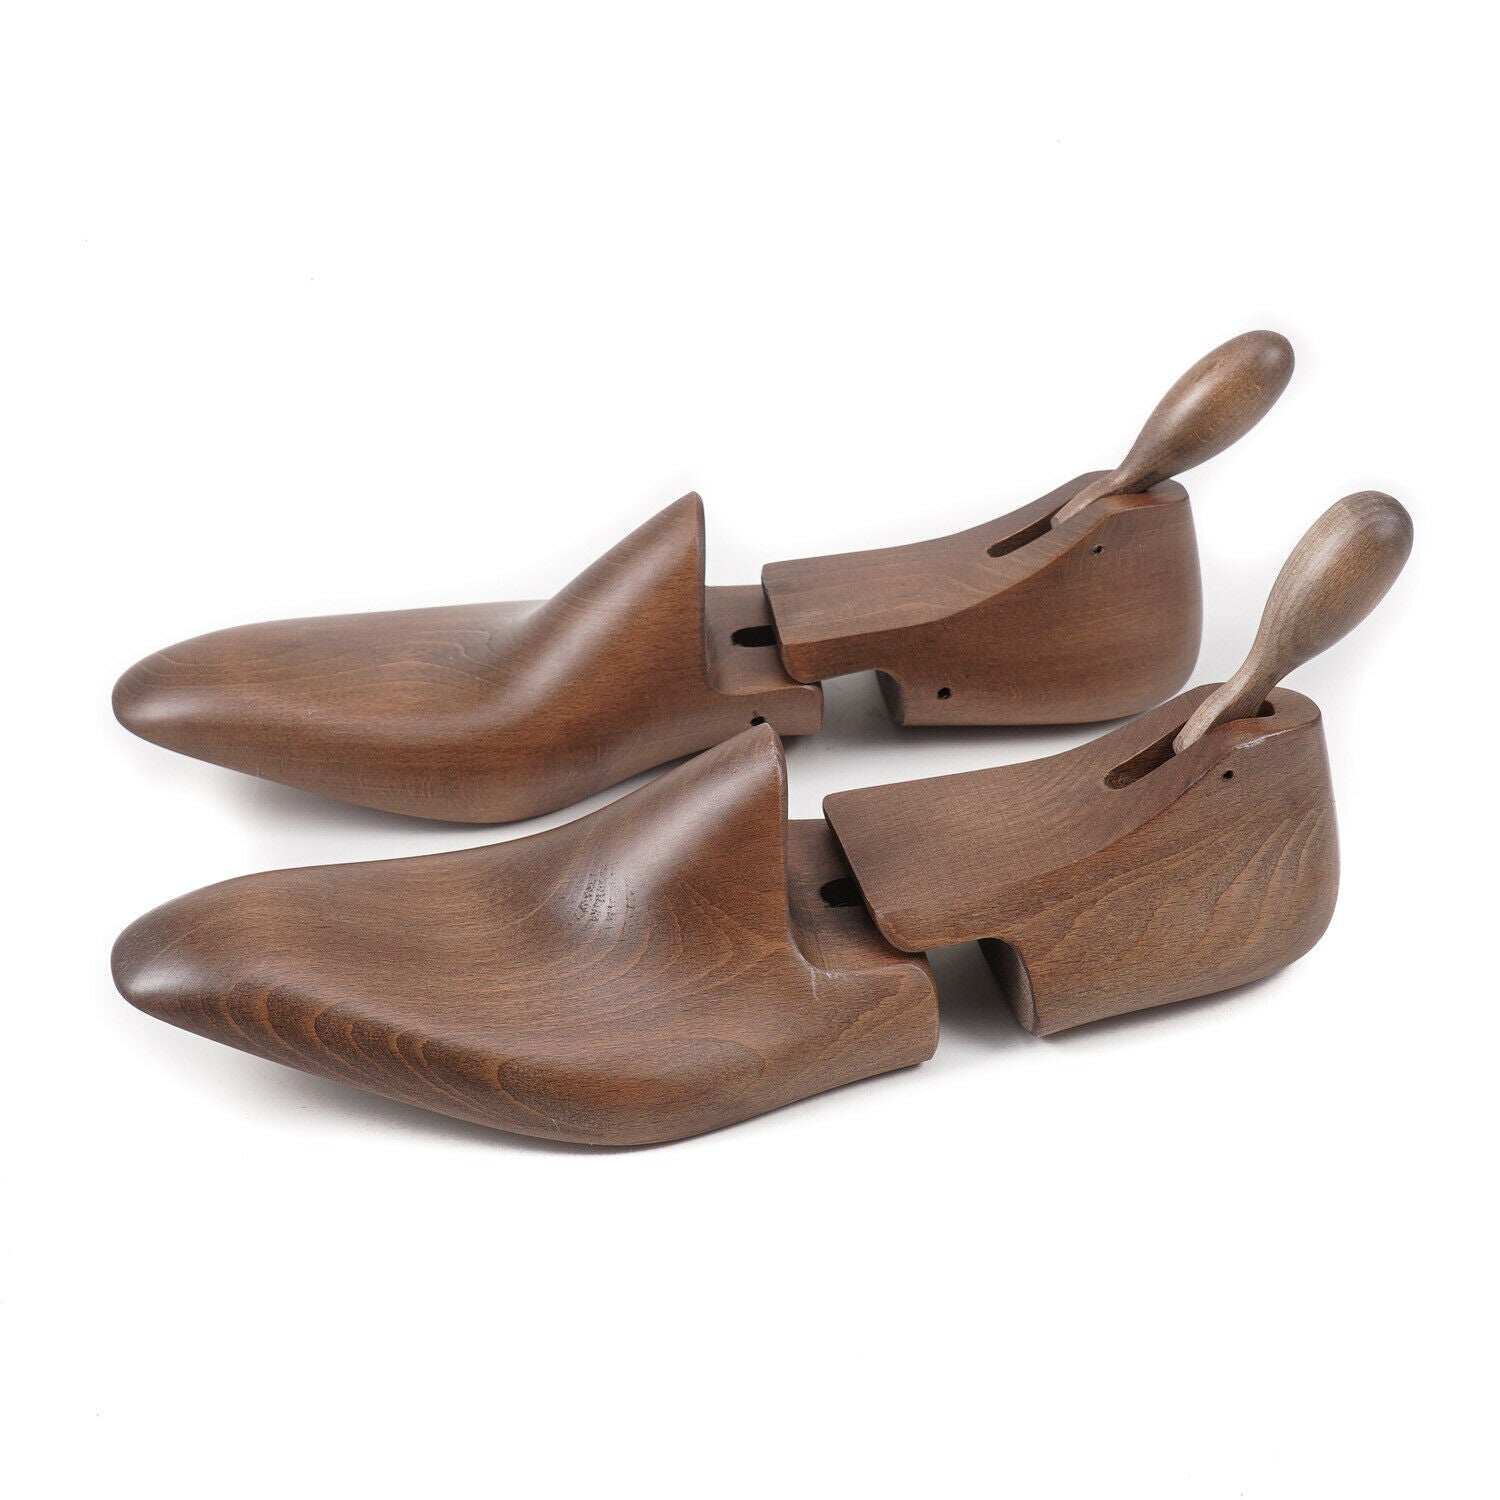 Salvatore Ferragamo Solid Wood Luxury Shoe Trees - Top Shelf Apparel